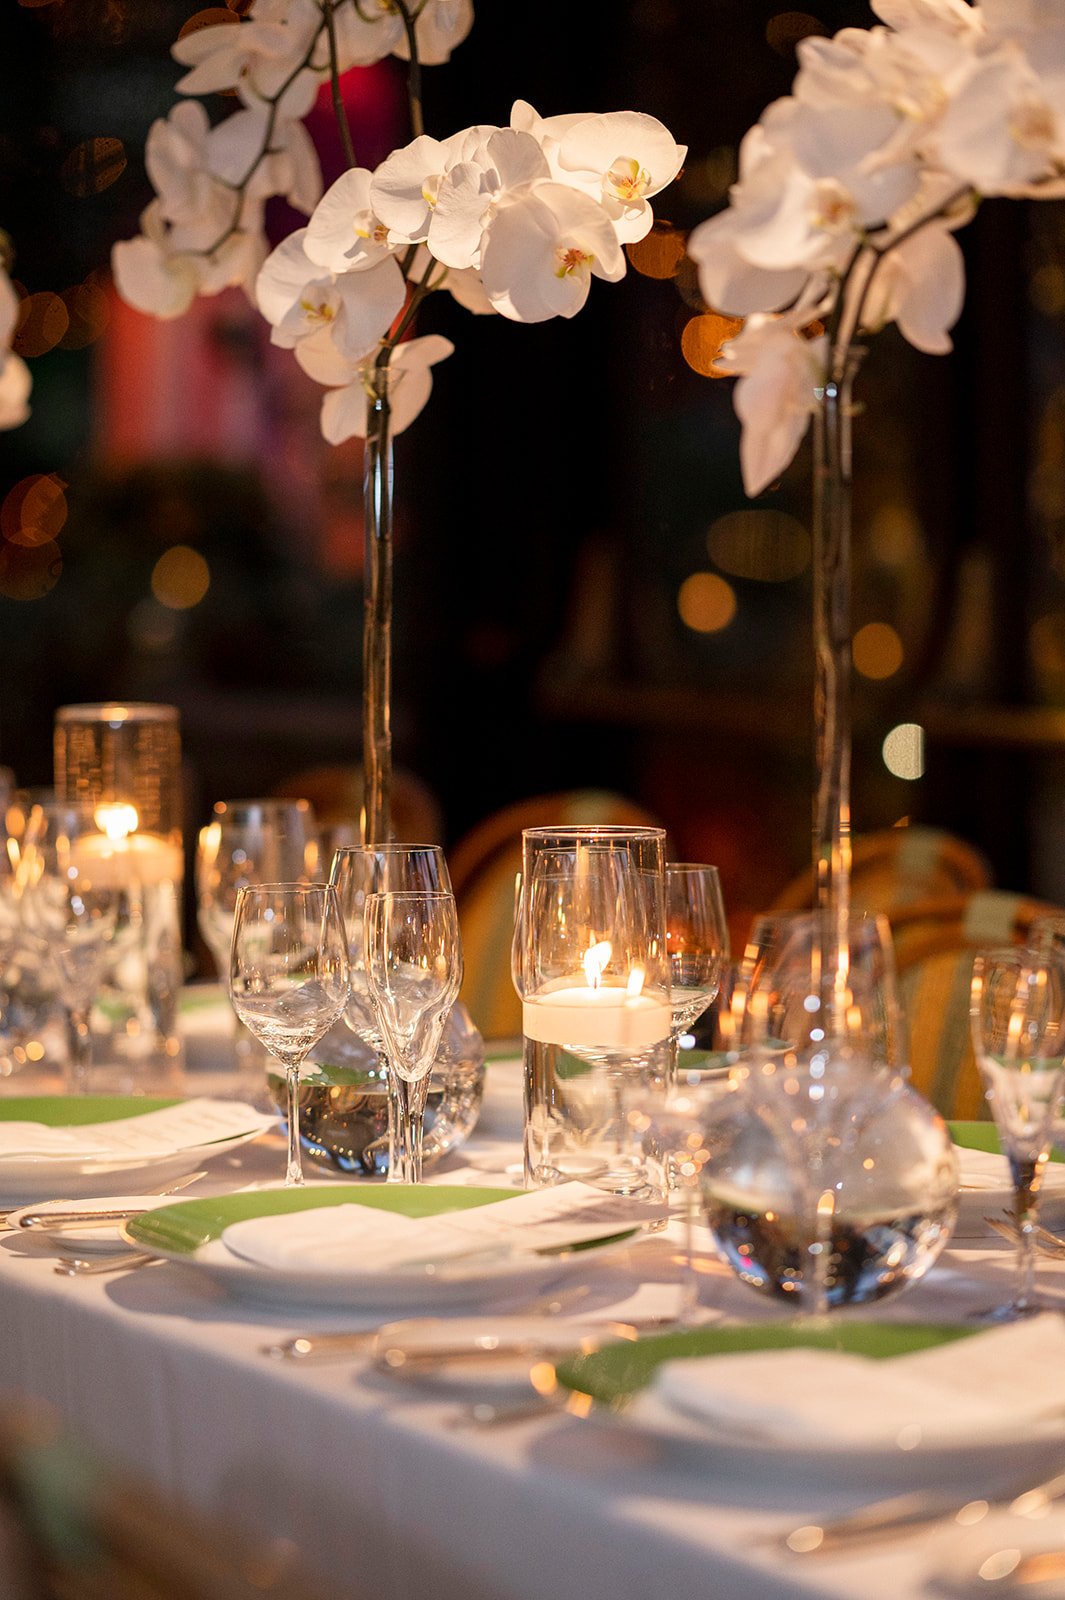  An Elegant Wedding Reception at The River Cafe | Wedding day detail photos 